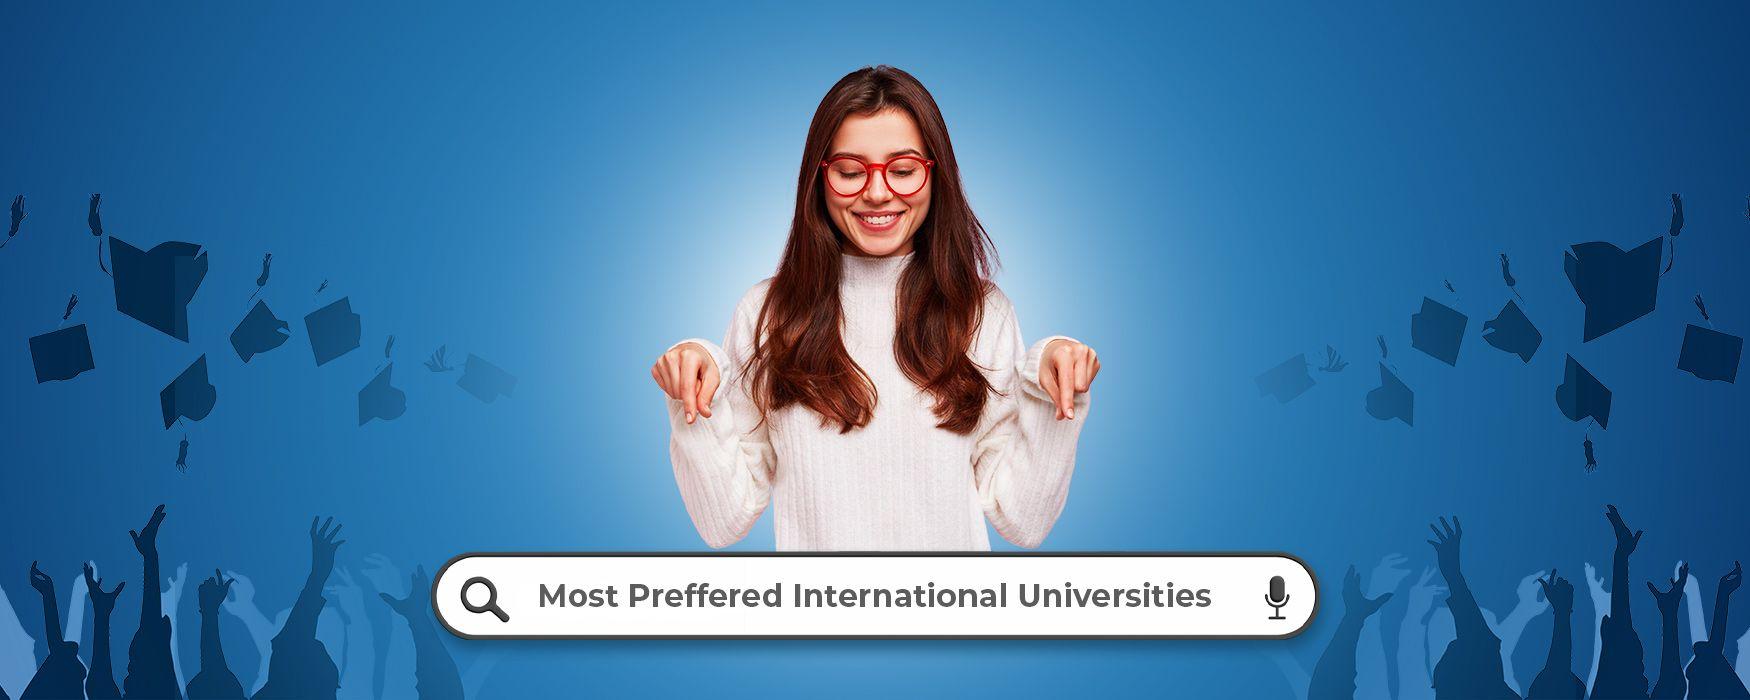 Most-Preffered-International-Universities-By-Indian-Student.jpg